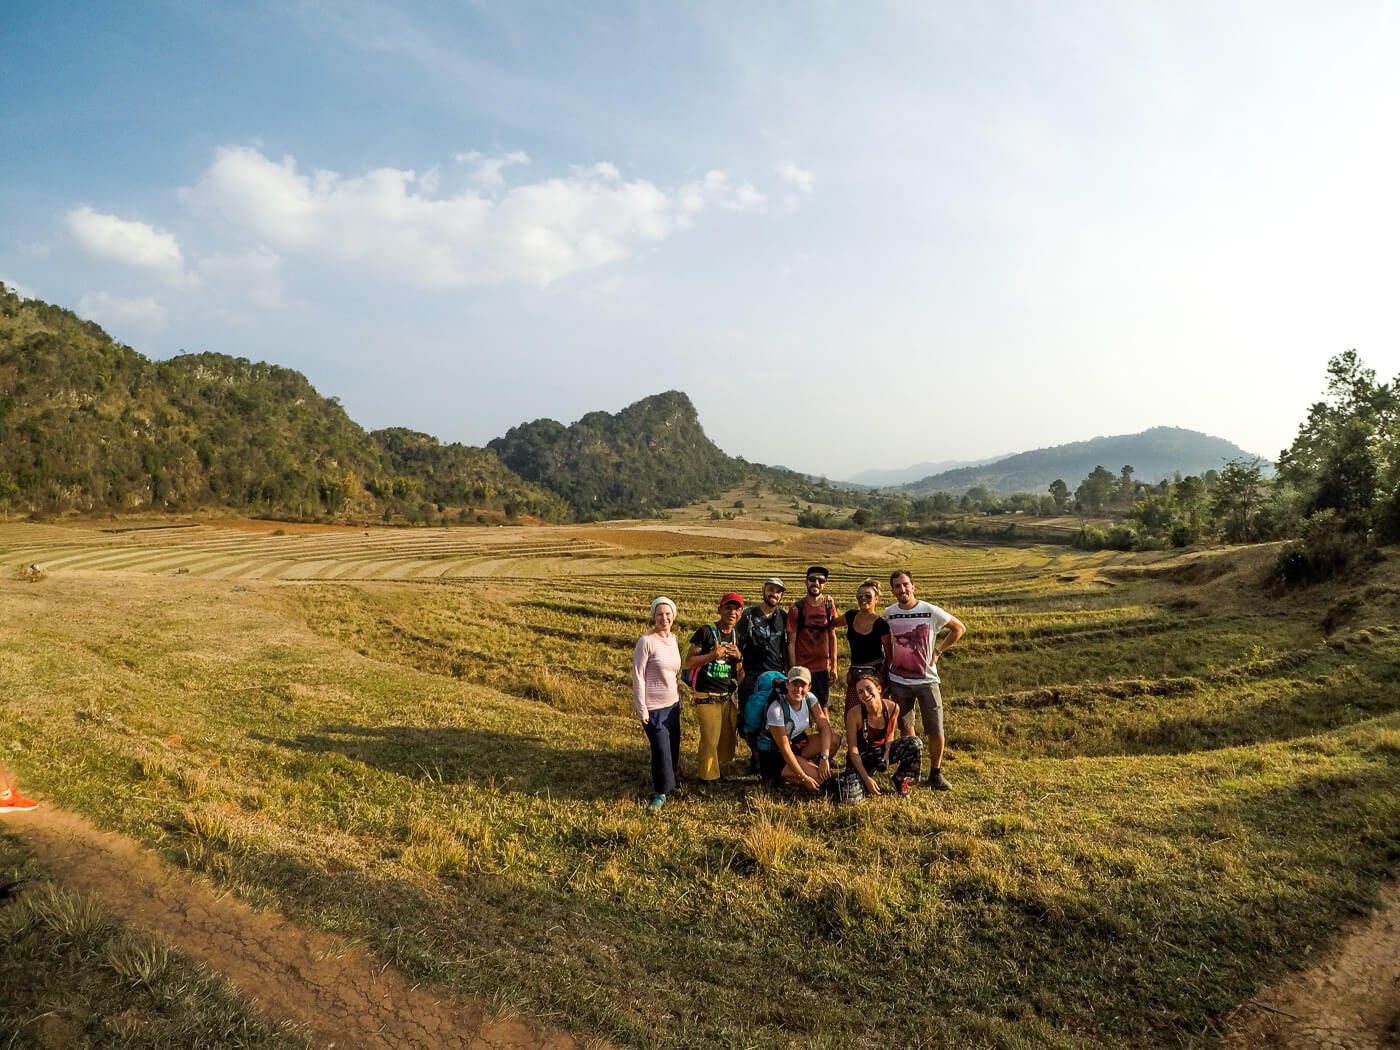 Hiking in Kalaw Rice Fields, Myanmar